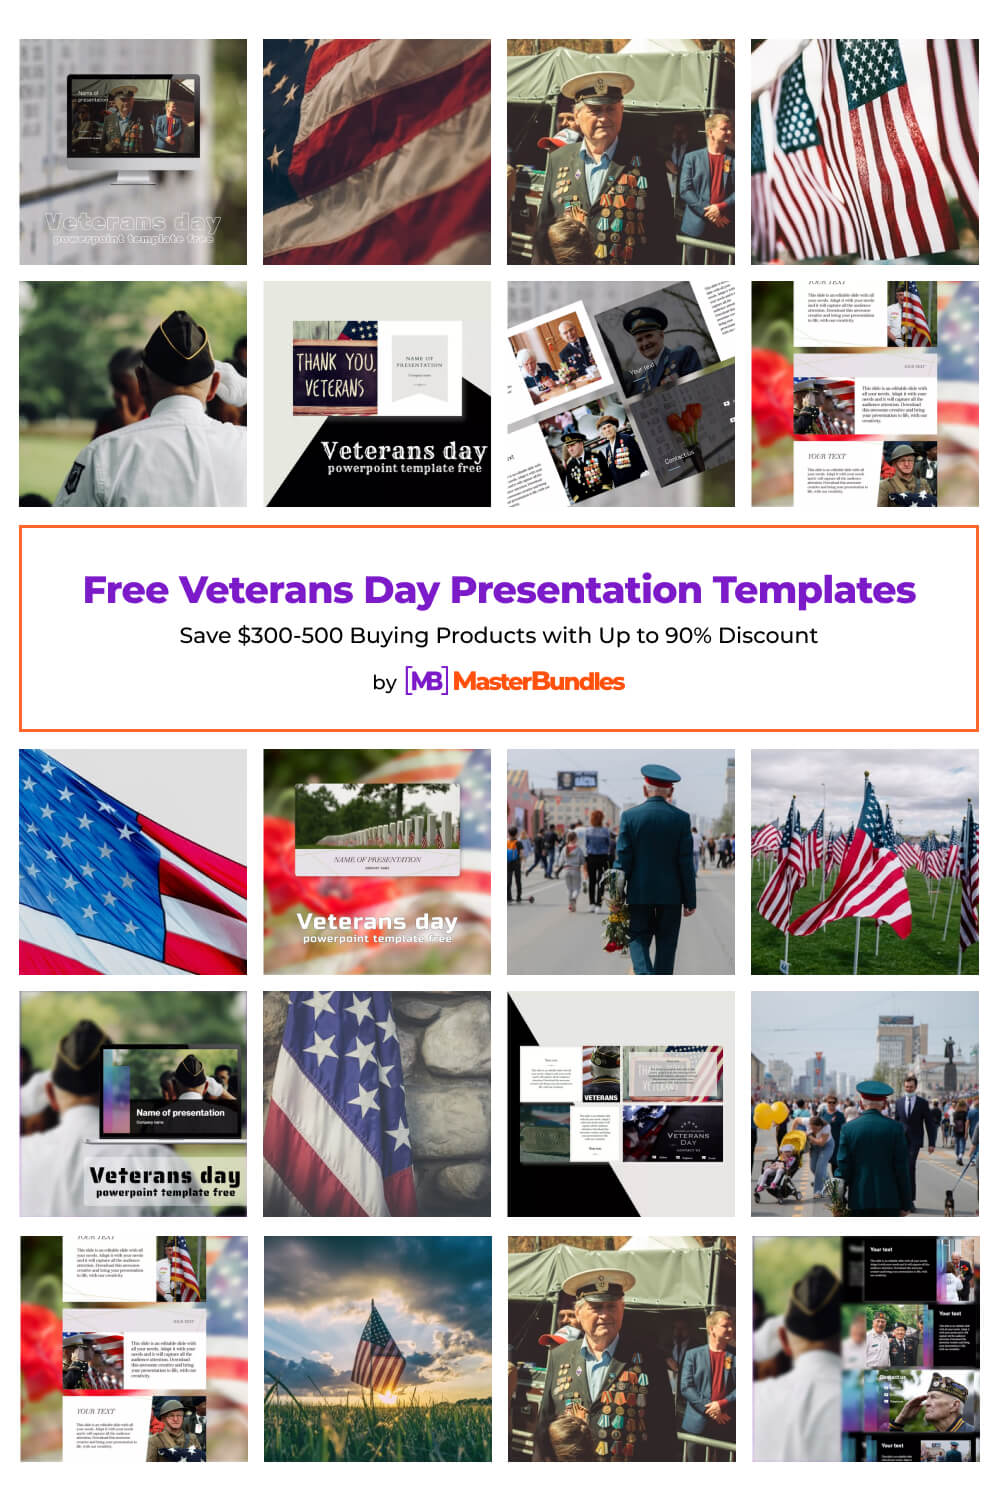 free veterans day presentation templates pinterest image.